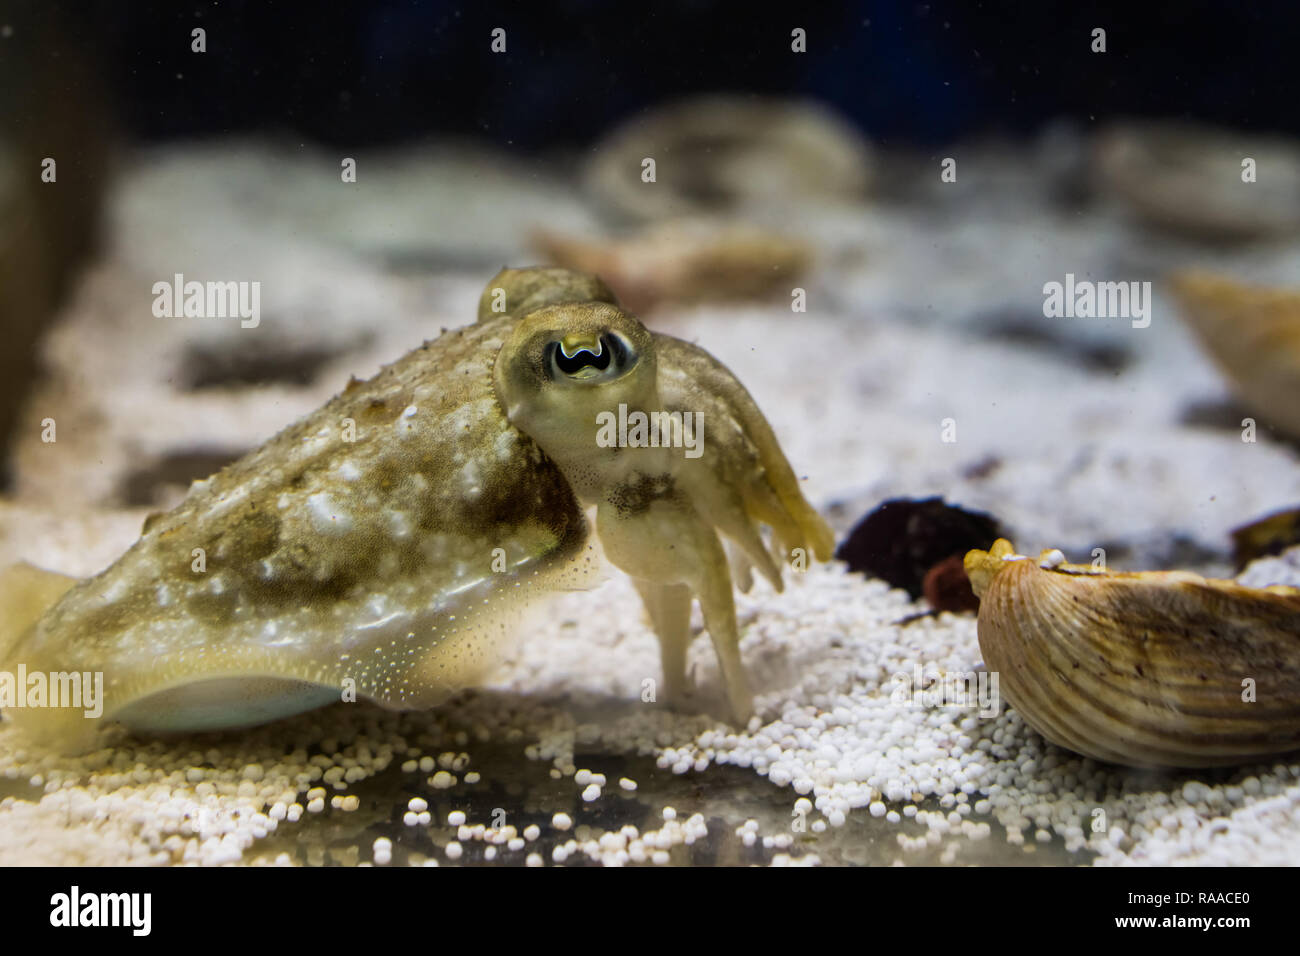 closeup of a cuttle fish, funny pet for the aquarium Stock Photo